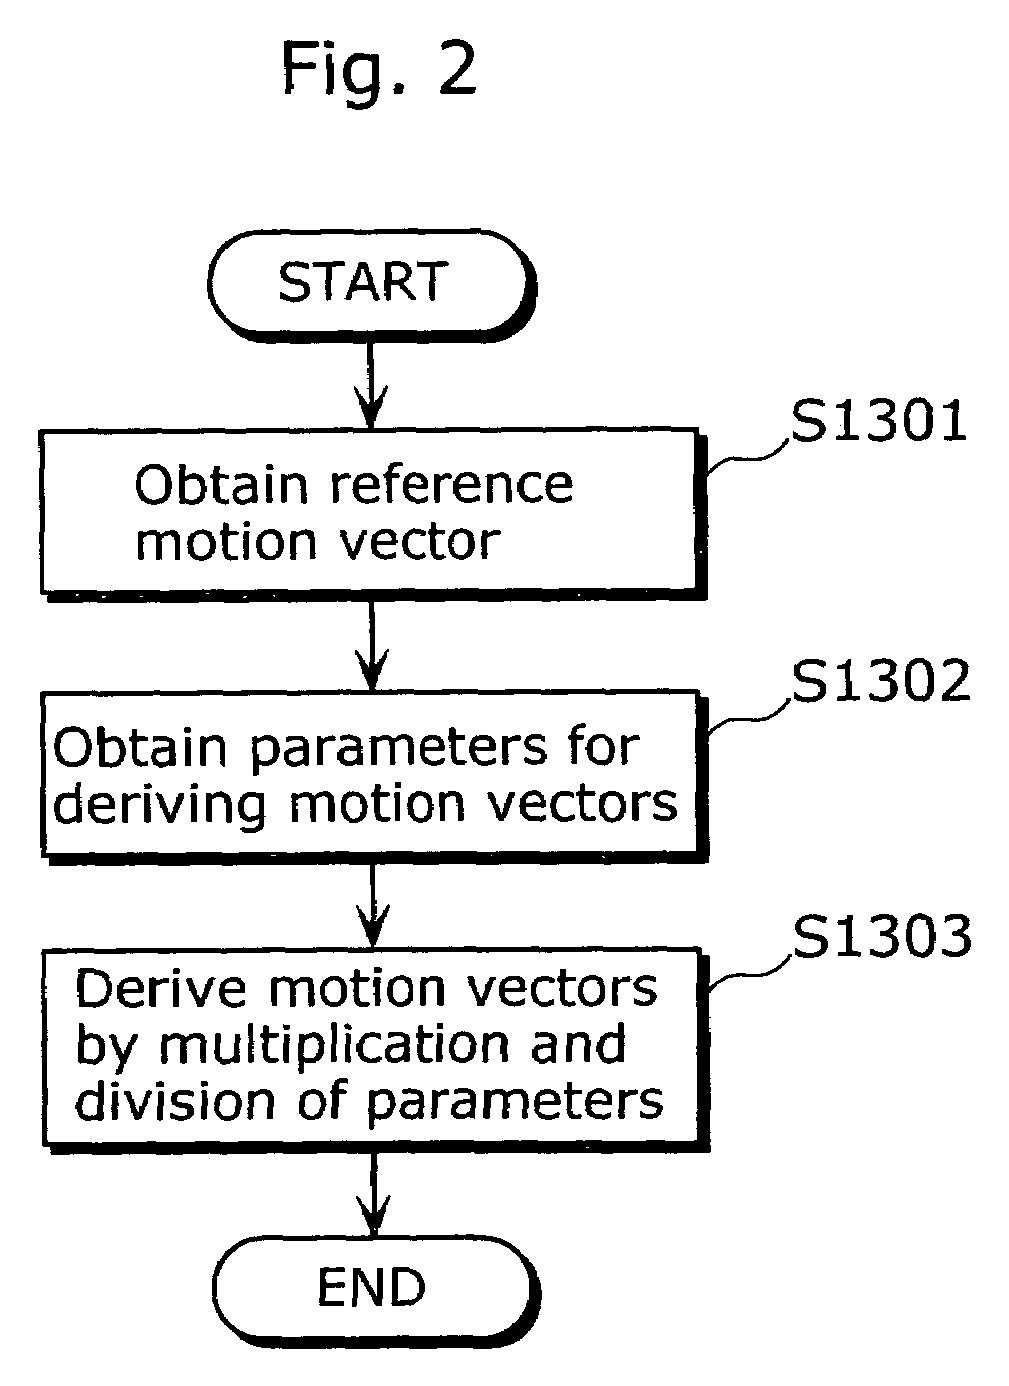 Motion vector derivation method, dynamic image encoding method, and dynamic image decoding method